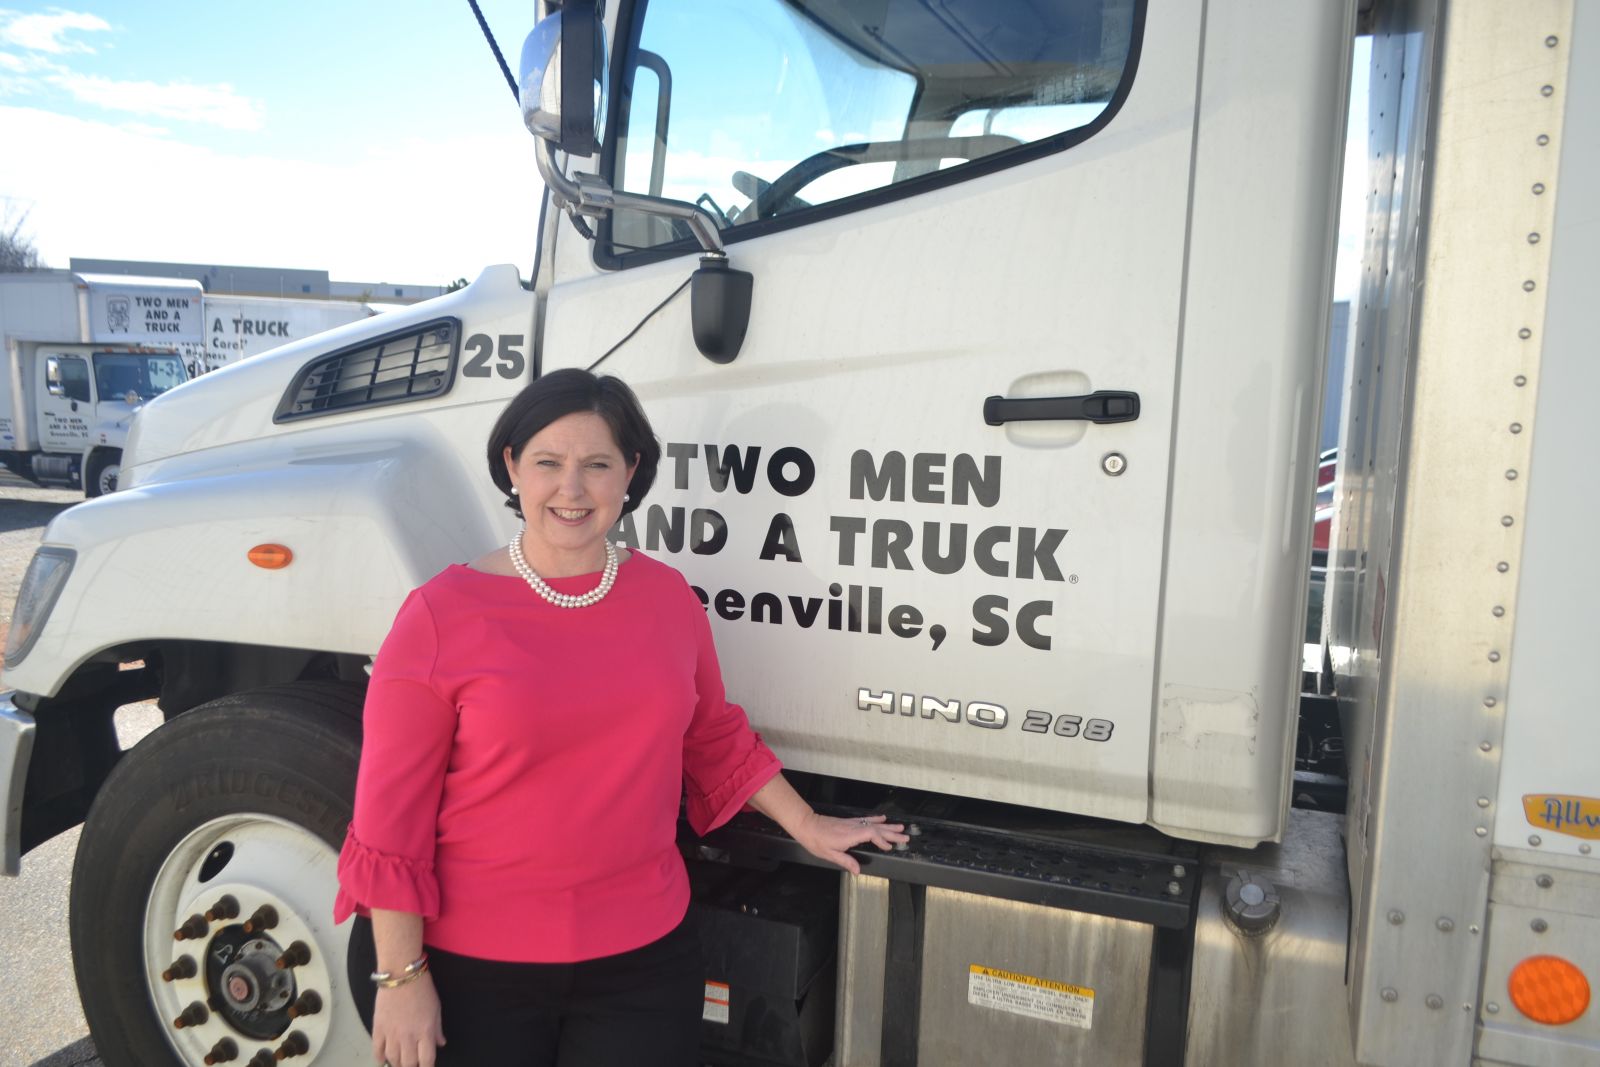 Rebecca Feldman owns Two Men and a Truck in Greenville. (Photo/Teresa Cutlip)